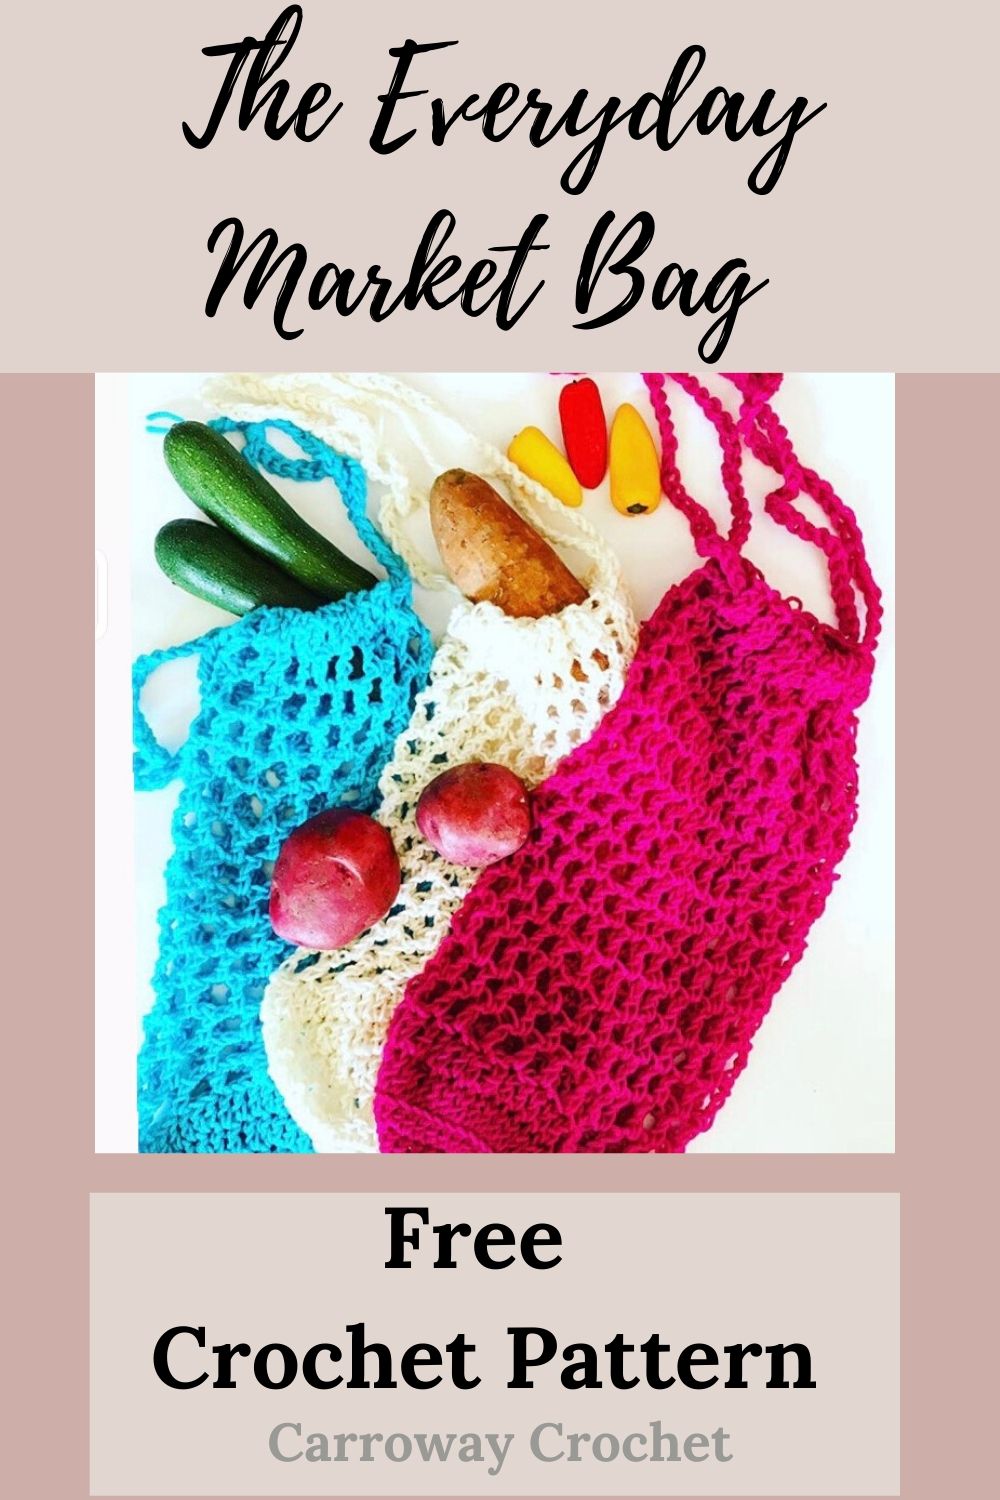 Free Pattern: The Everyday Market Bag Crochet Pattern - Carroway Crochet